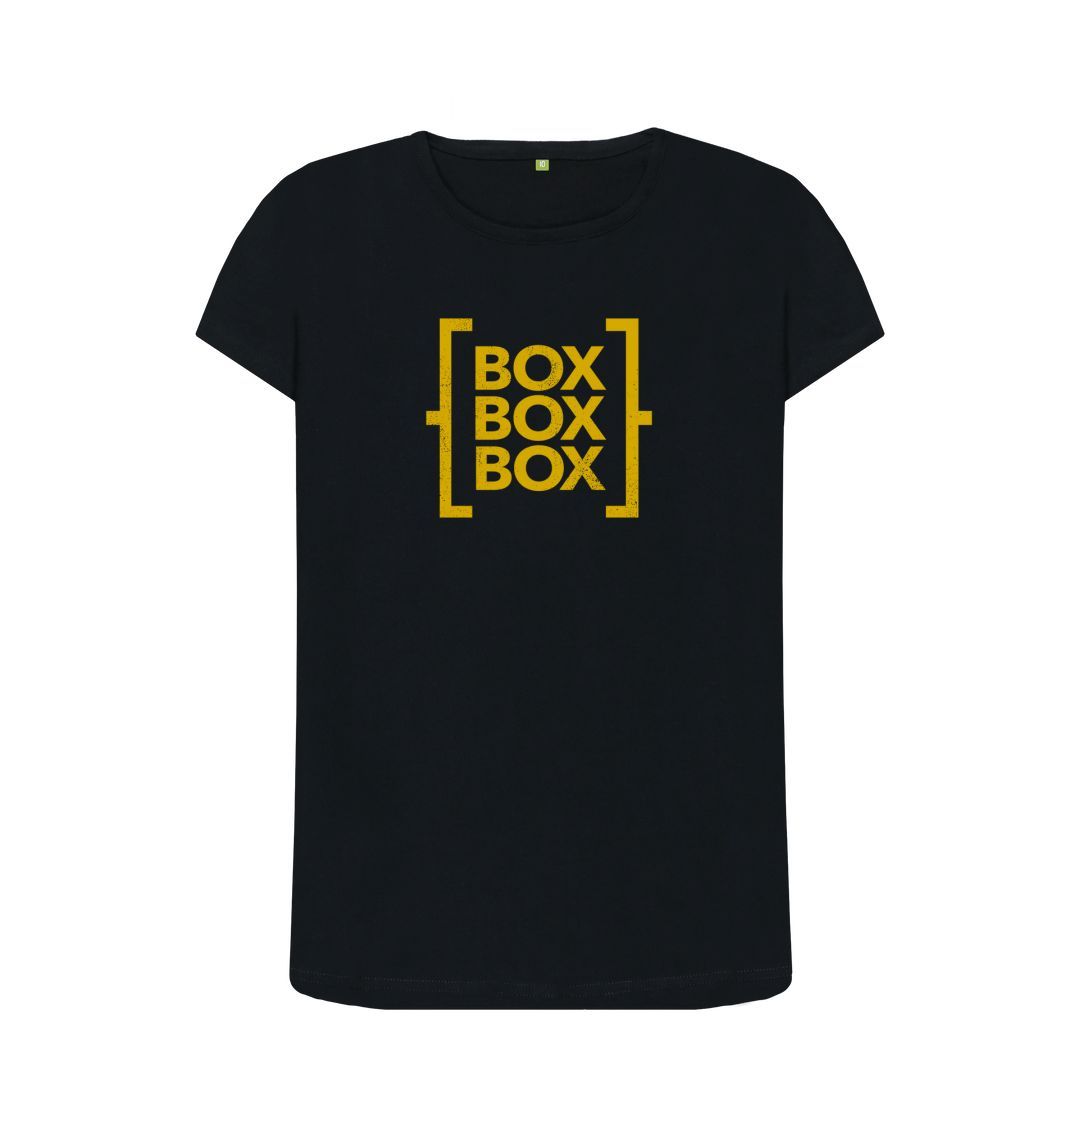 Black Box Box Box - the T-shirt (womens fit)